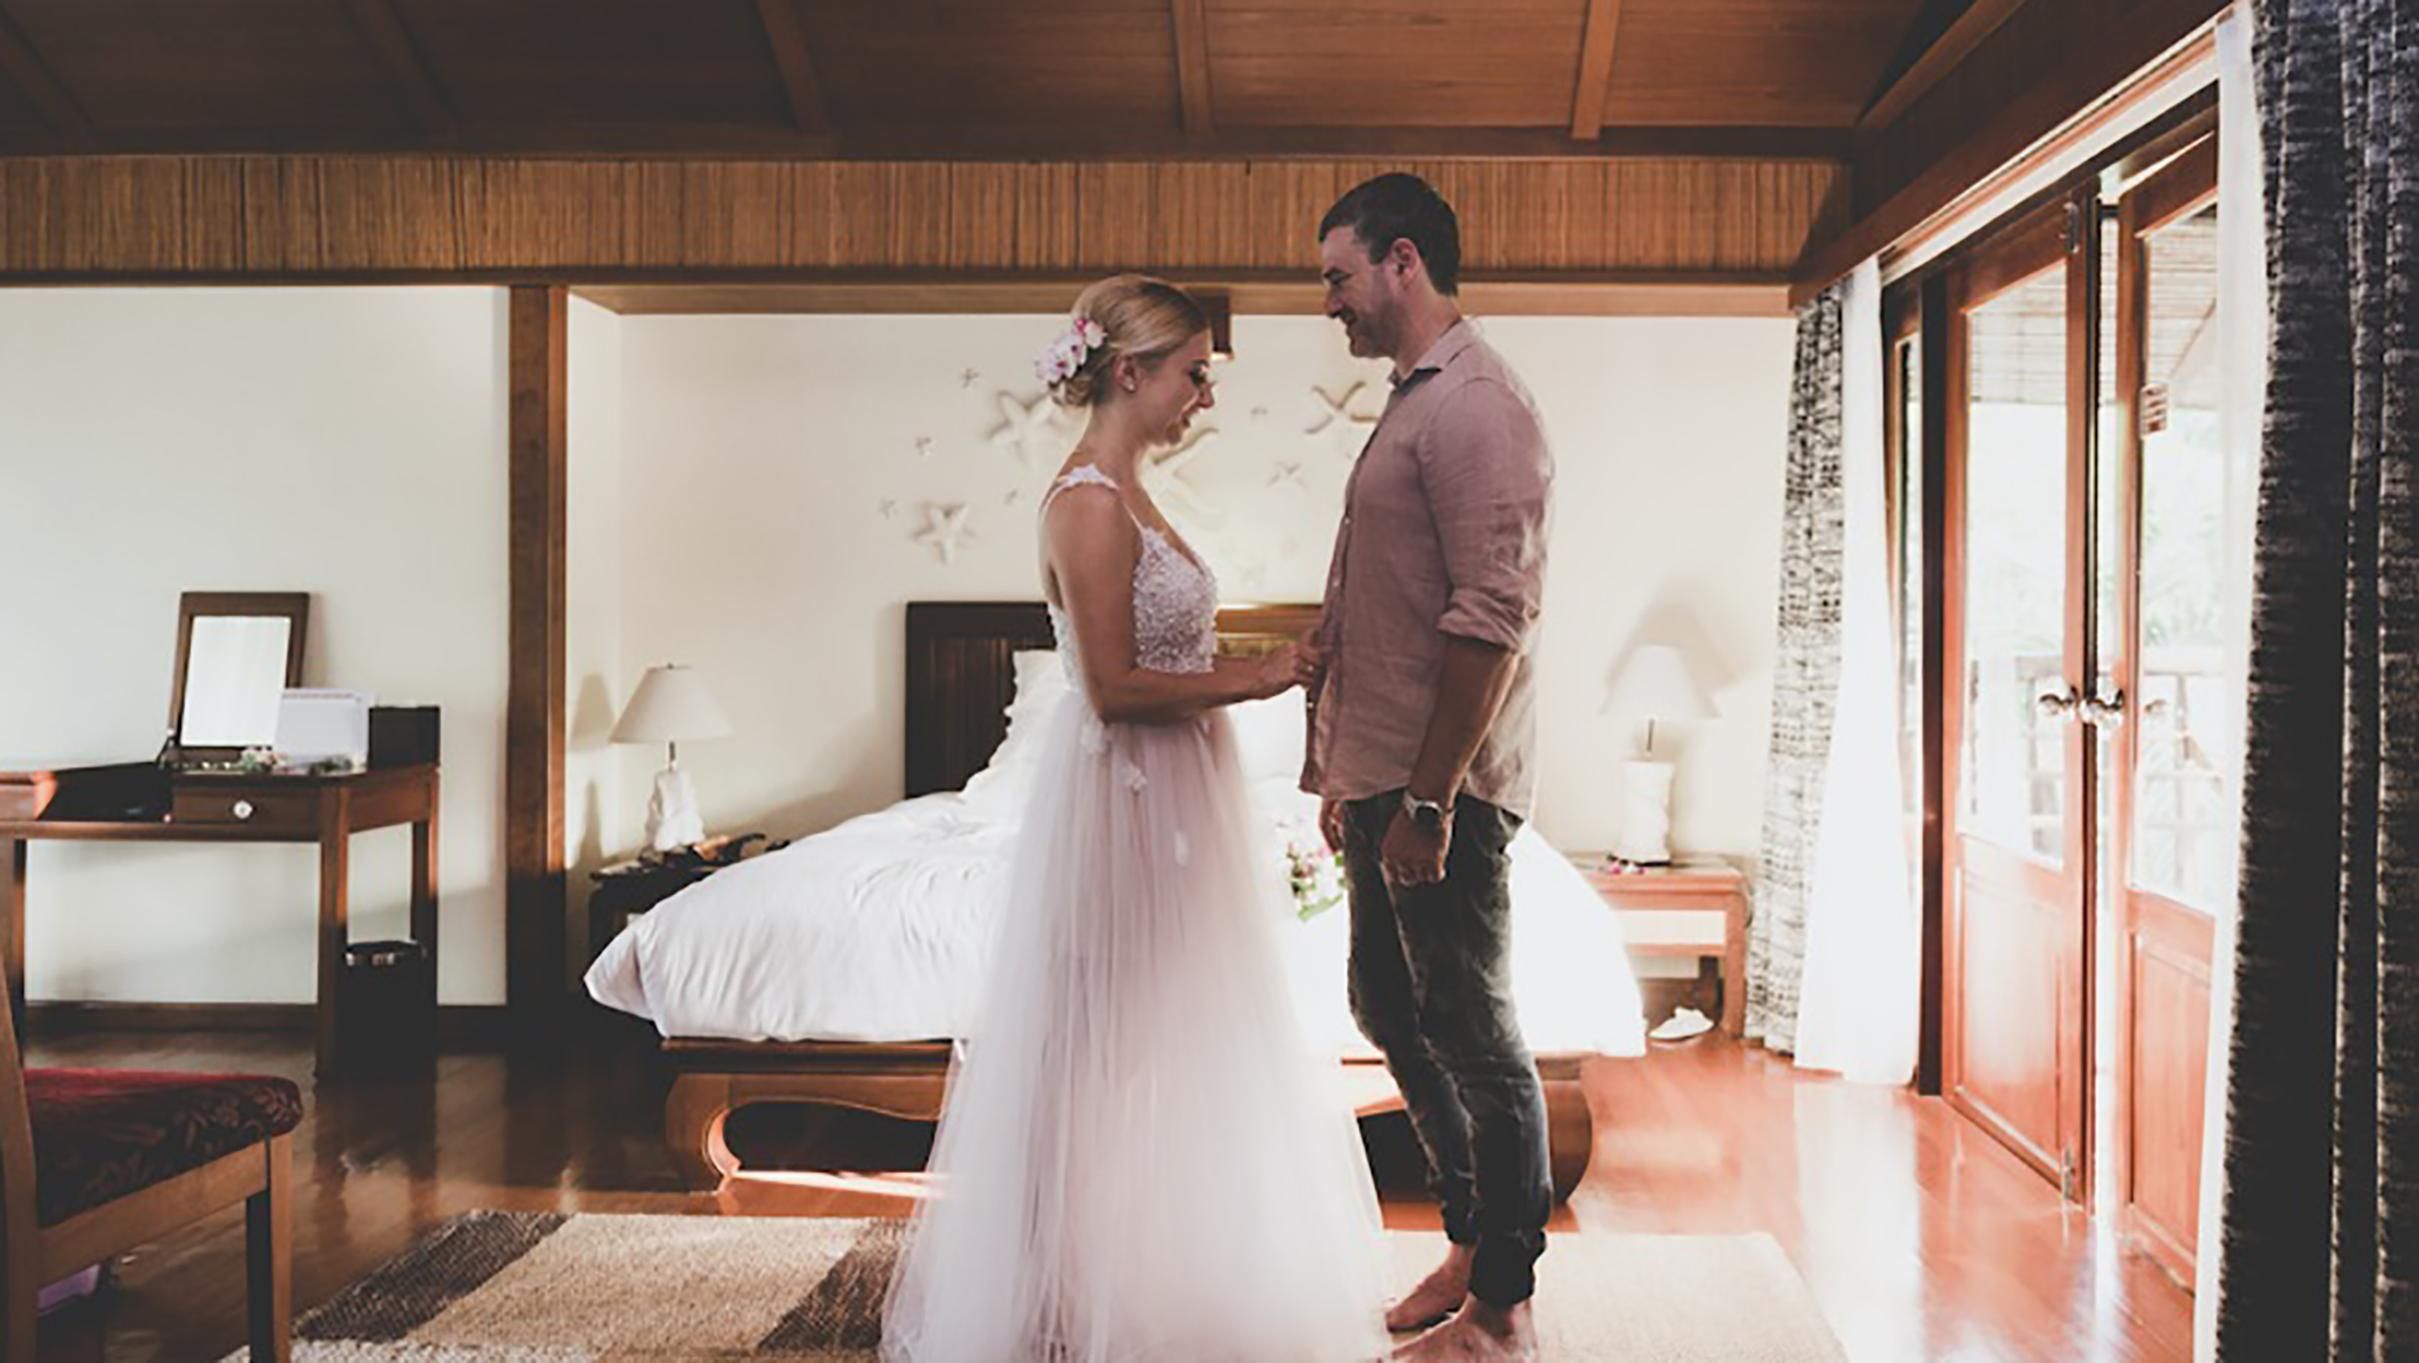 Тоня Матвиенко и Арсен Мирзоян показали новые фото со свадьбы в Таиланде